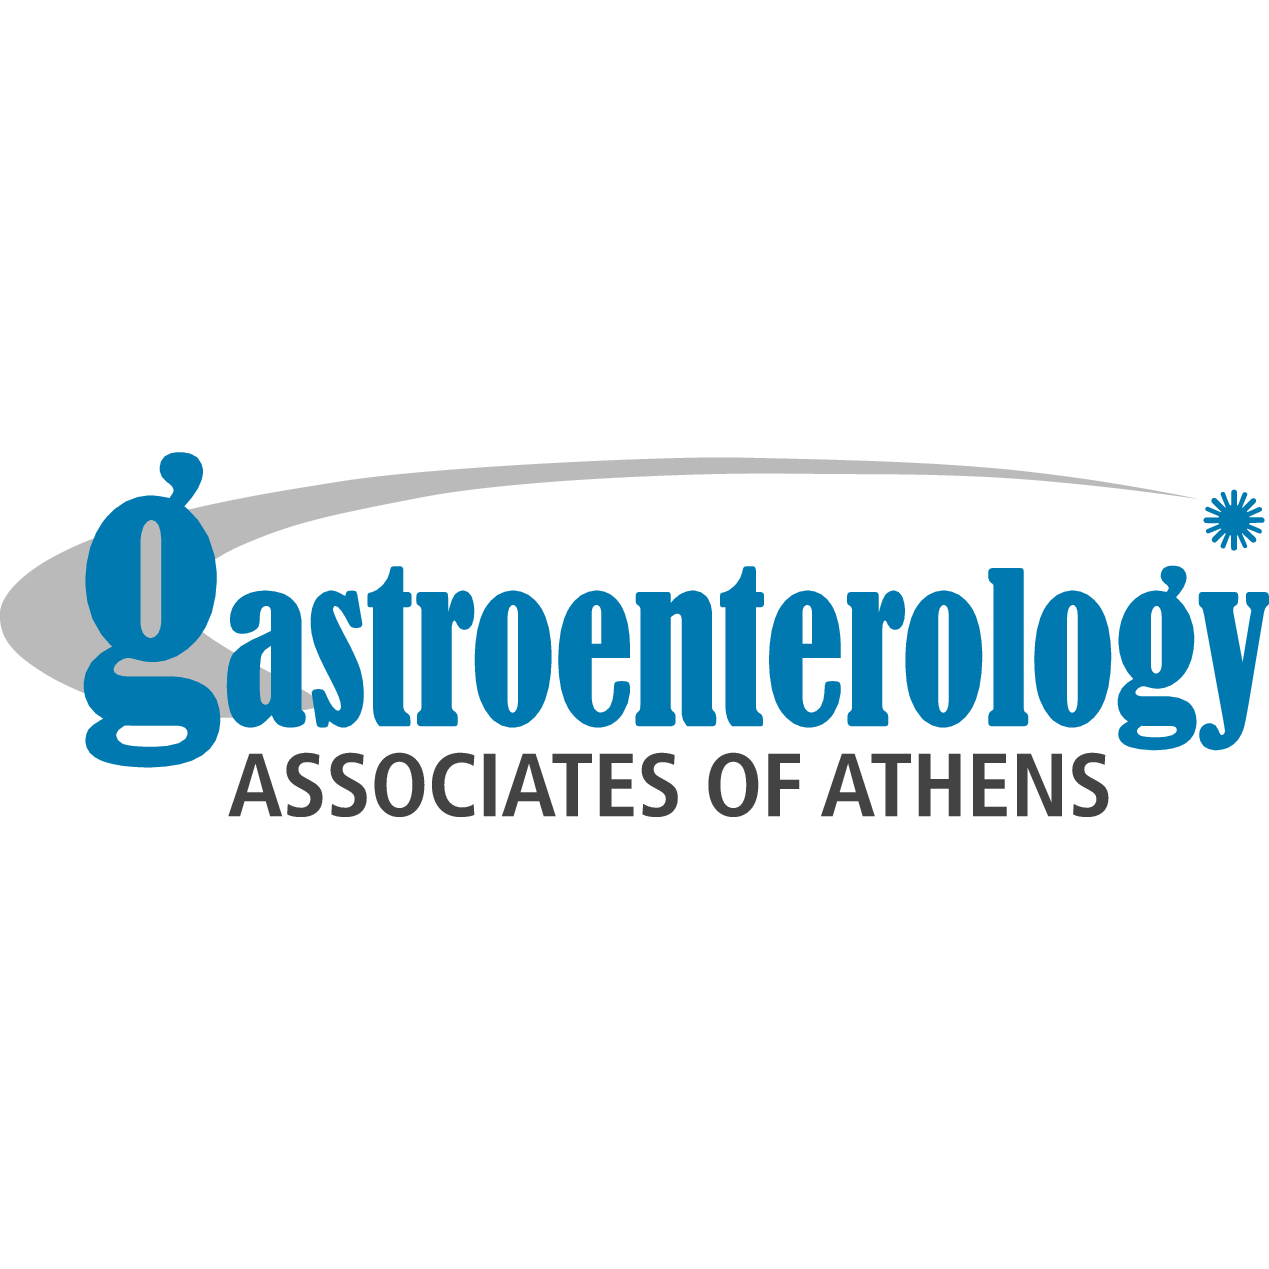 Gastroenterology Associates of Athens Photo